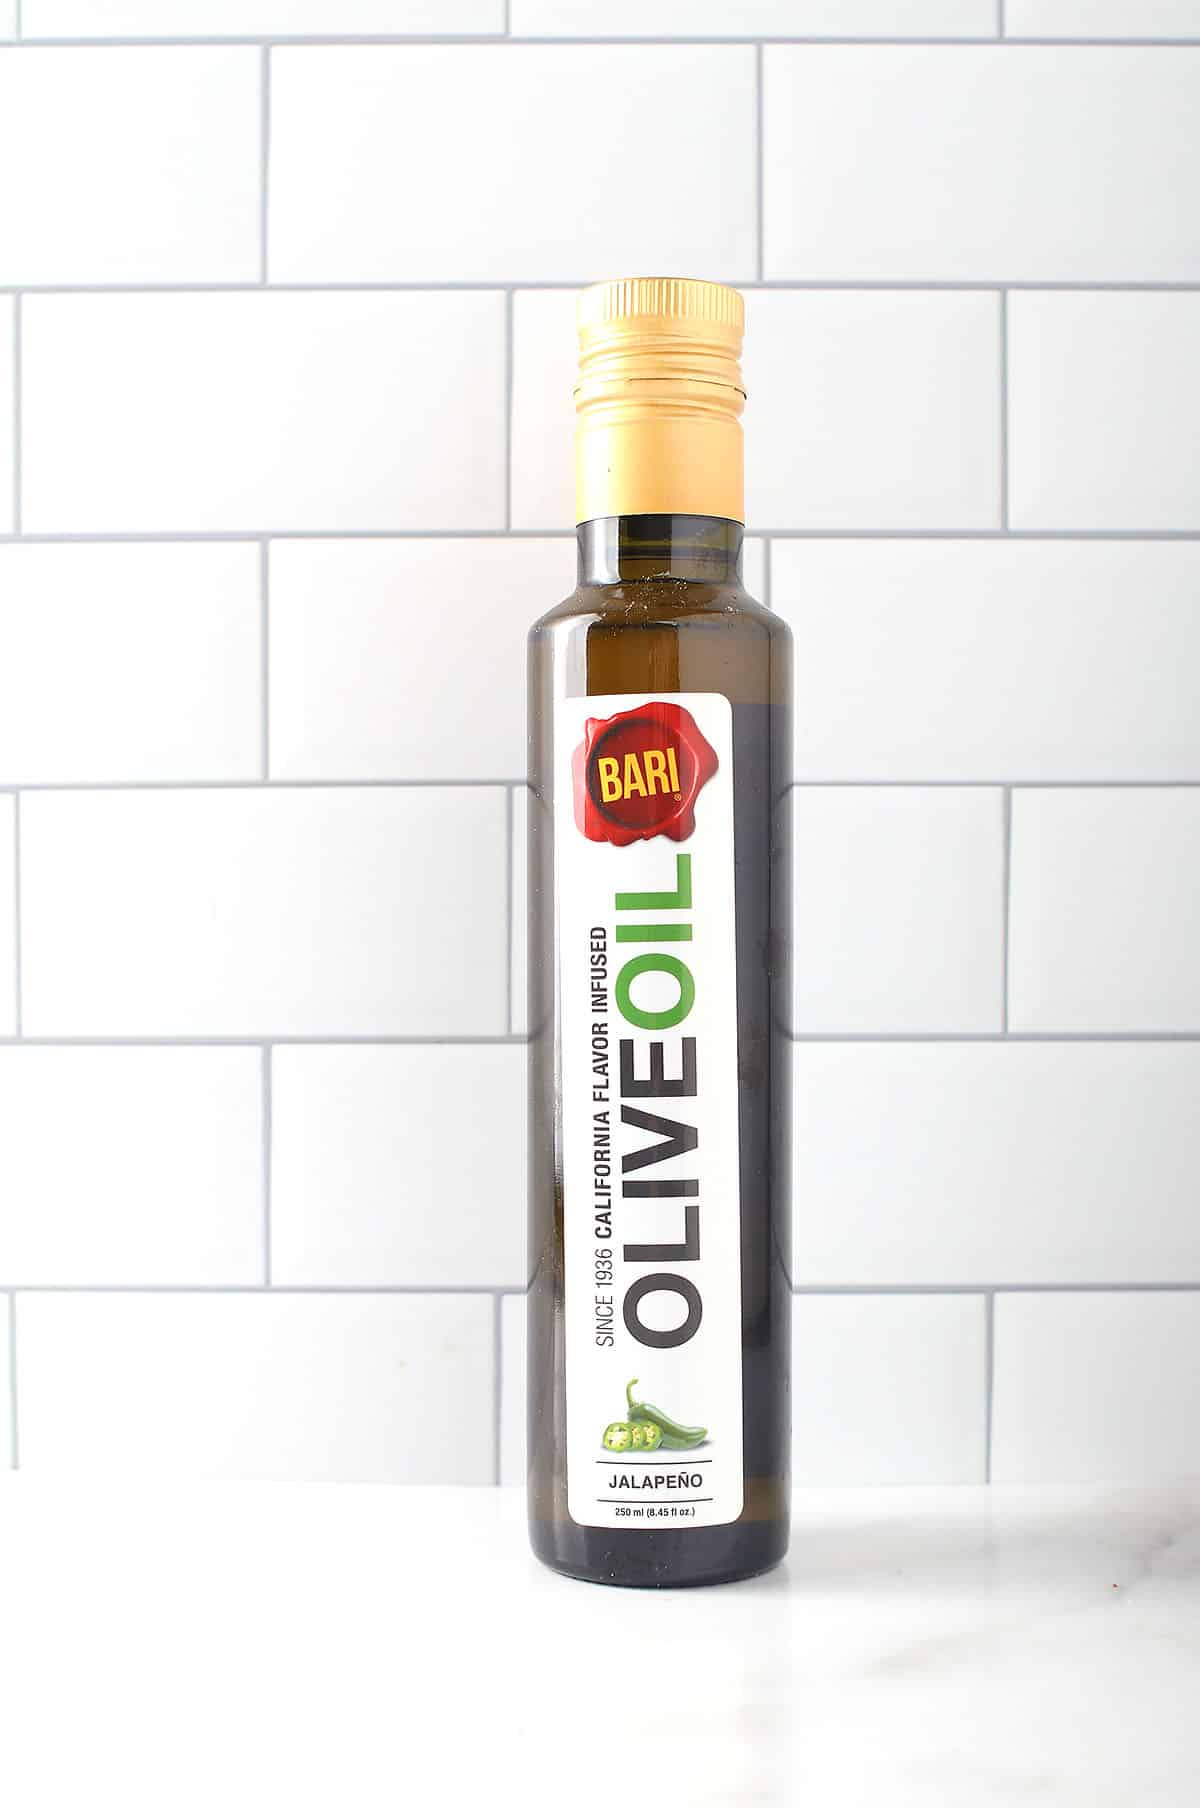 Bottle of Bari Jalapeño Infused Olive Oil